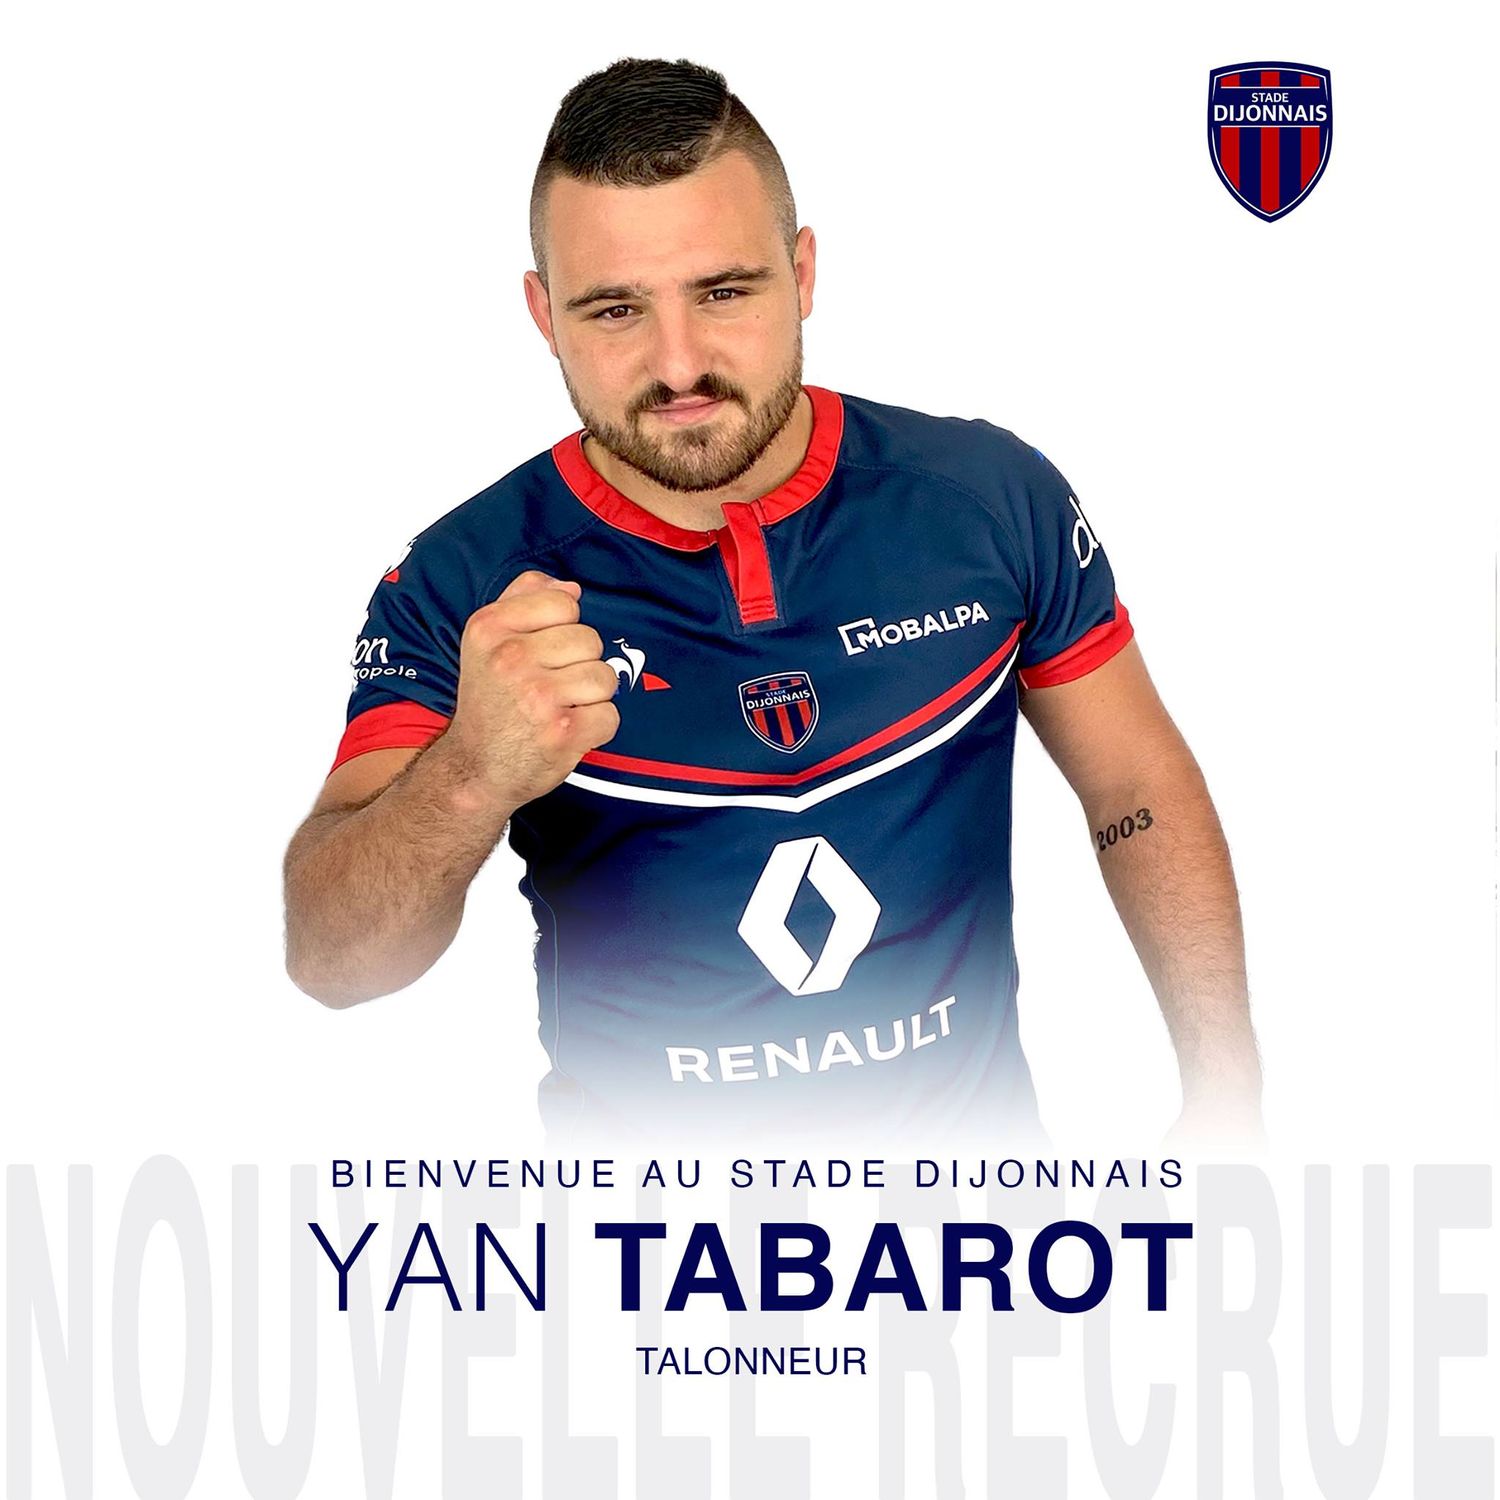 Yan Tabarot arrive en renfort au Stade Dijonnais 